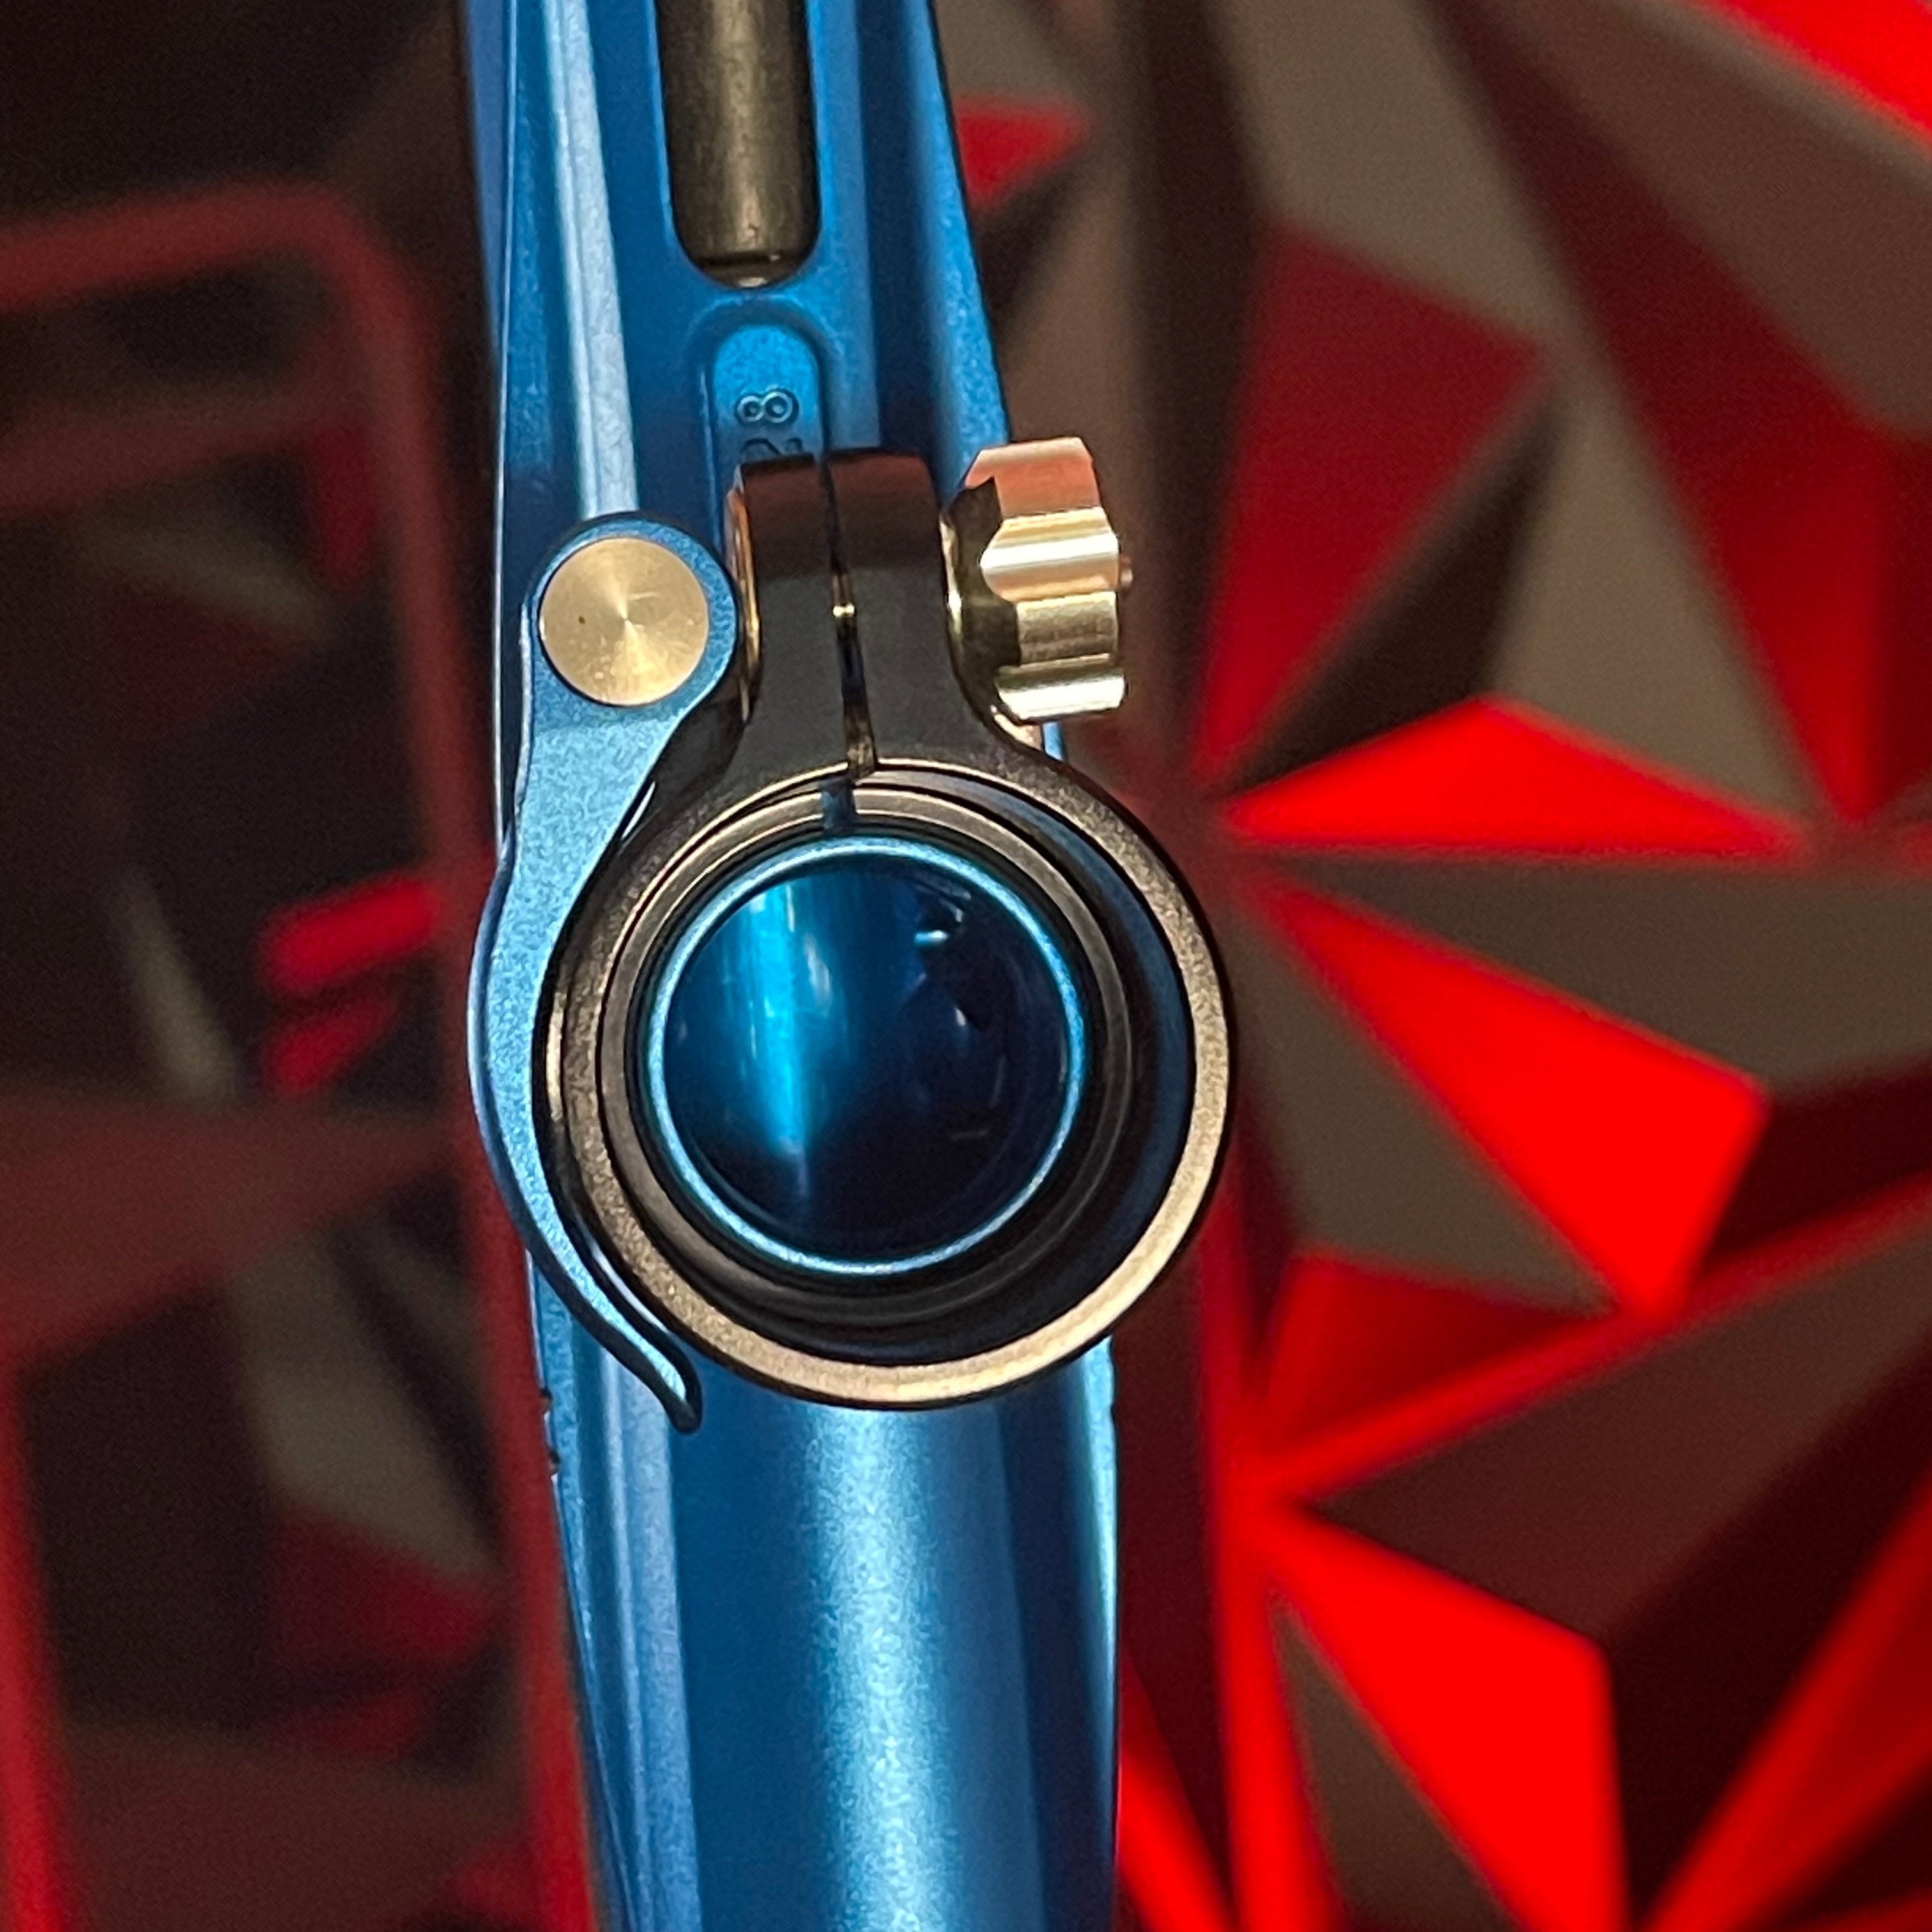 Used Planet Eclipse LV2 Paintball Gun - Blue/Black